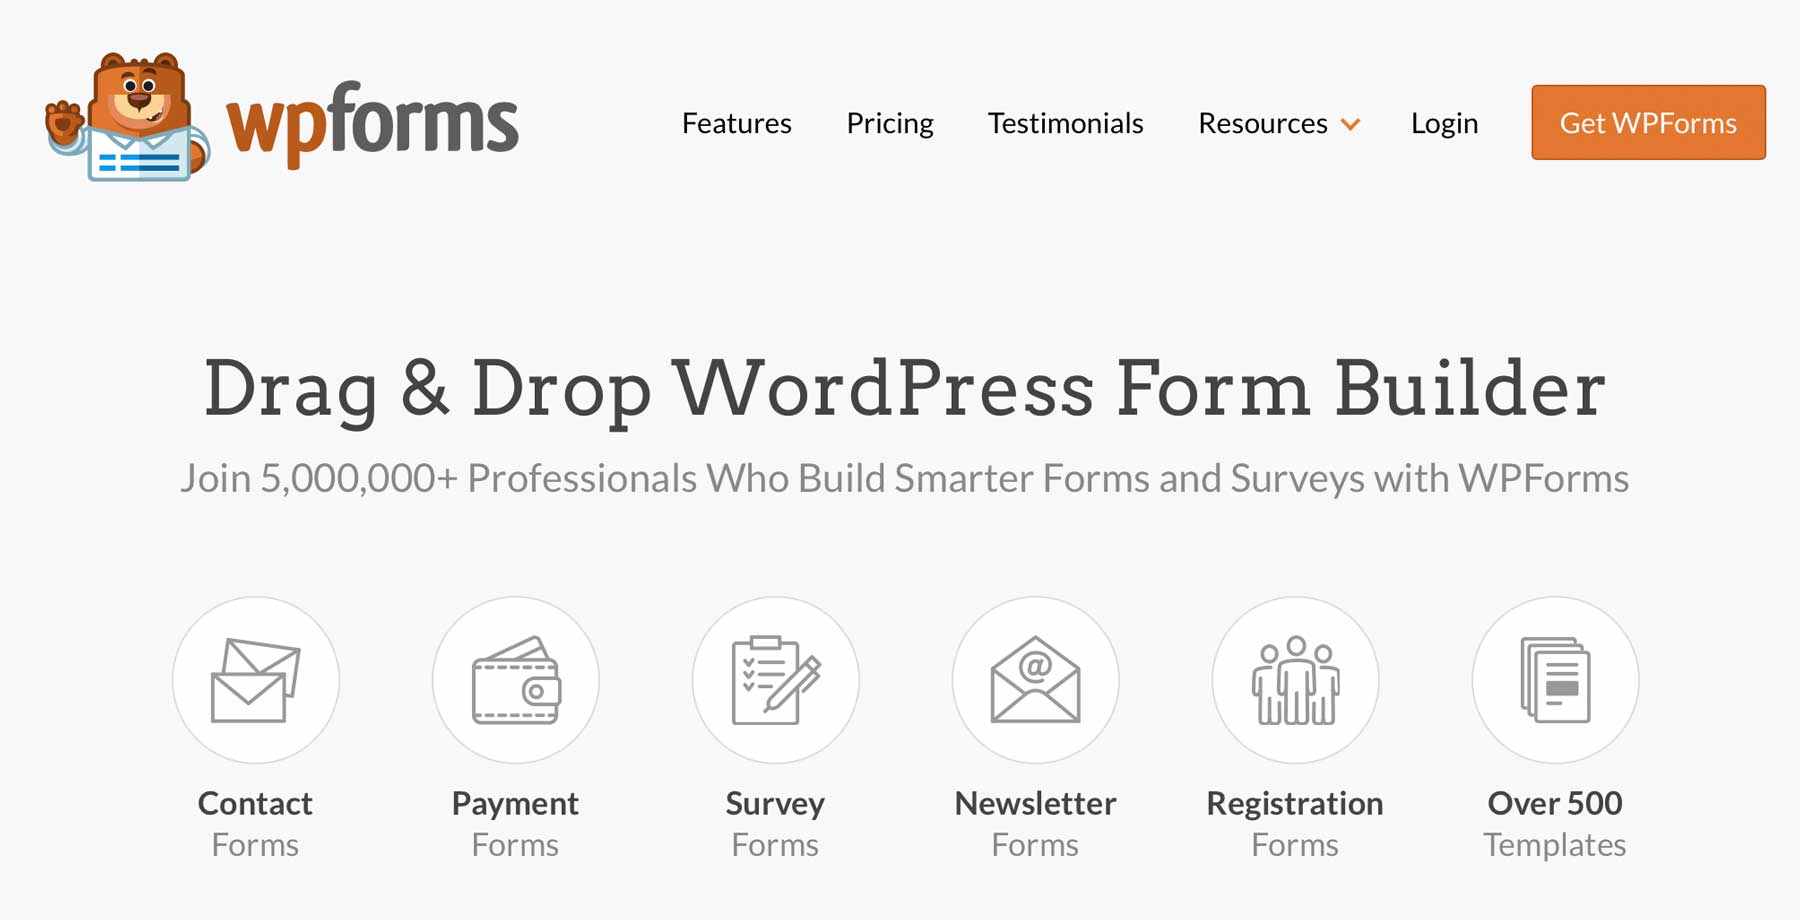 The WPForms WordPress plugin